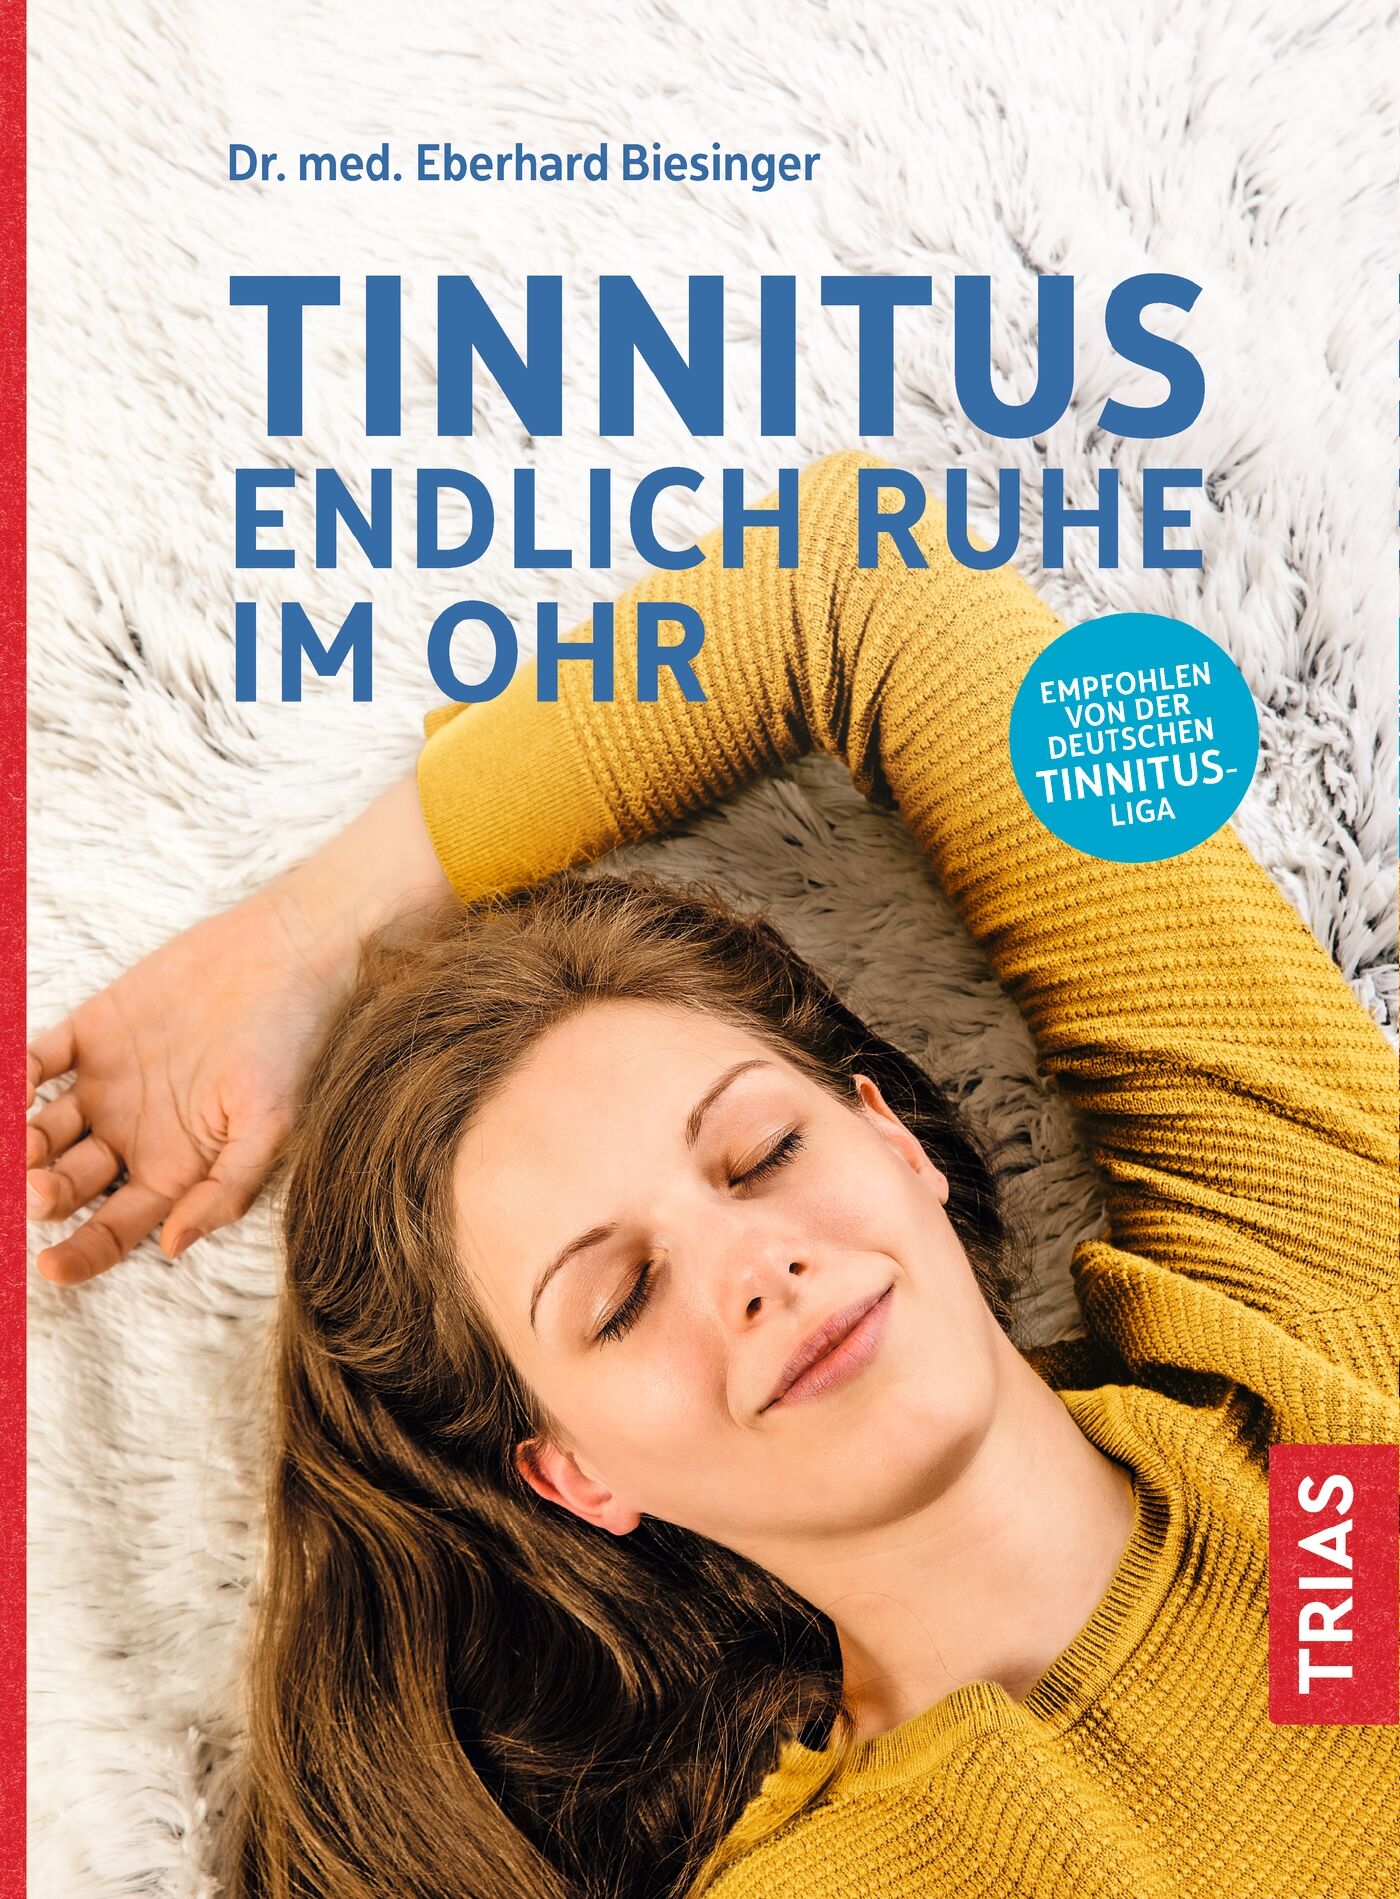 Tinnitus - Endlich Ruhe im Ohr, 9783432109398